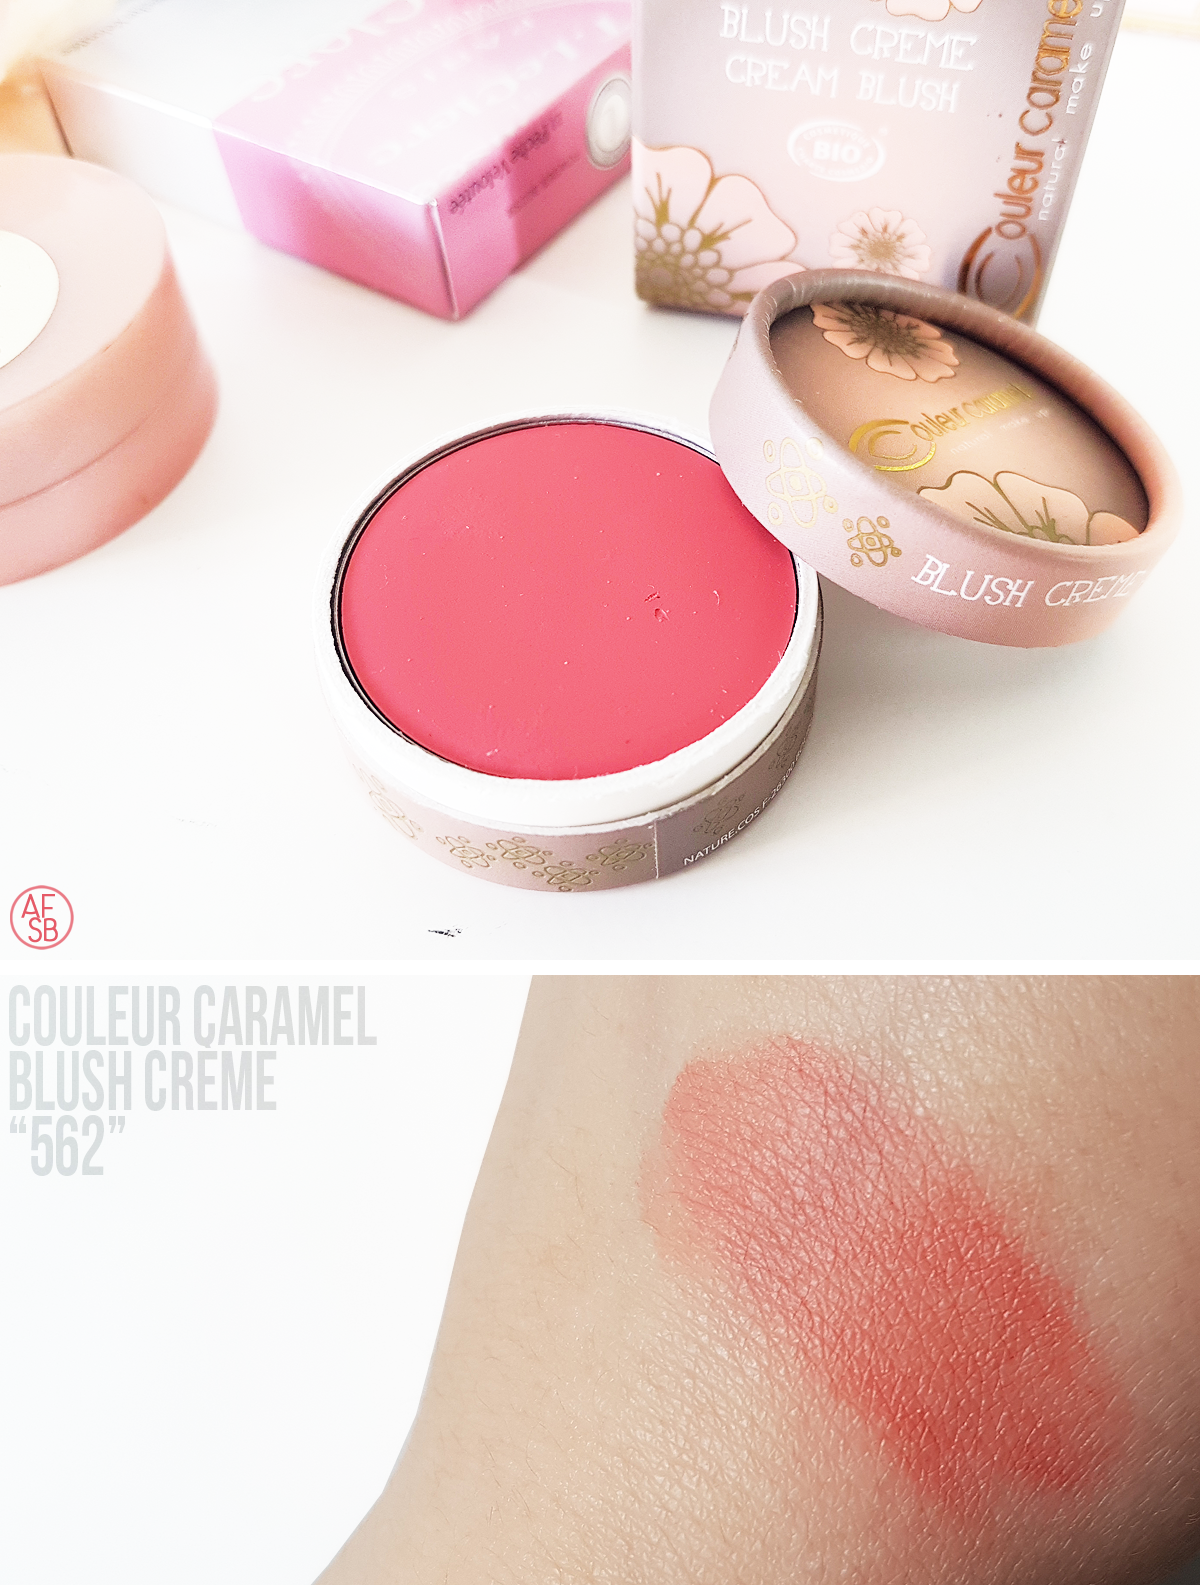 Couleur Caramel - Blush crème in 562